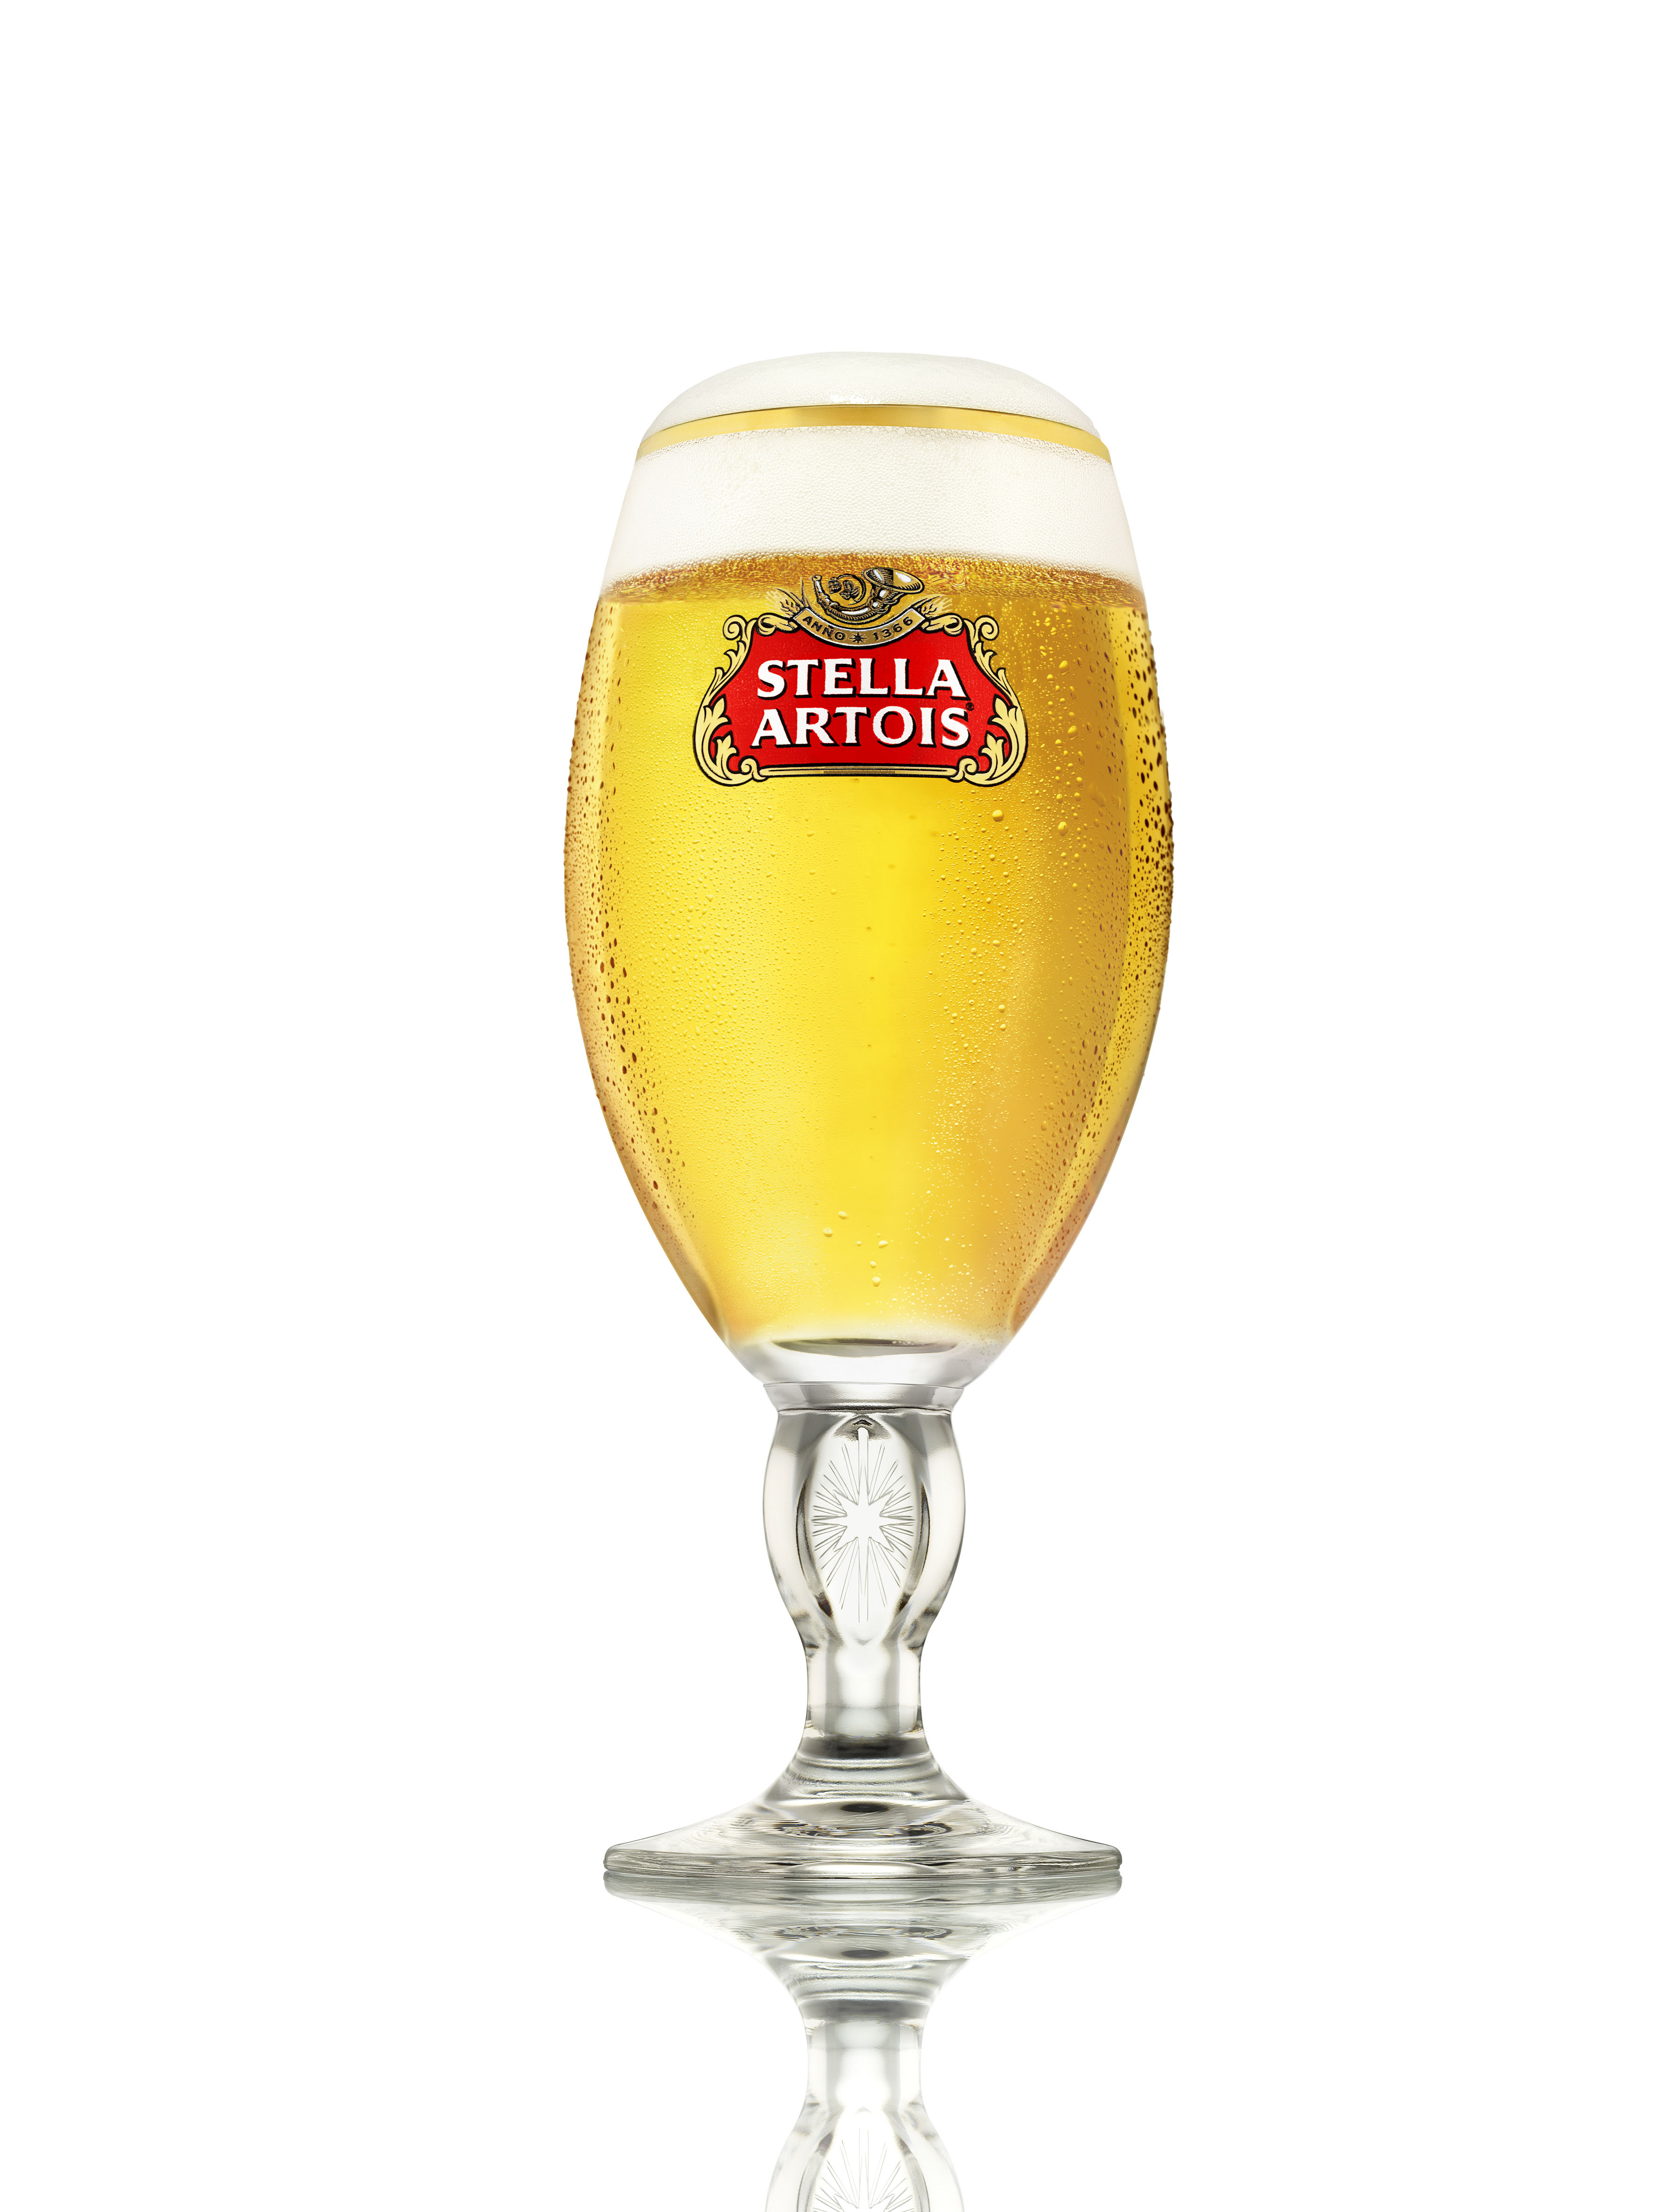 Stella Artois - Simple English Wikipedia, the free encyclopedia